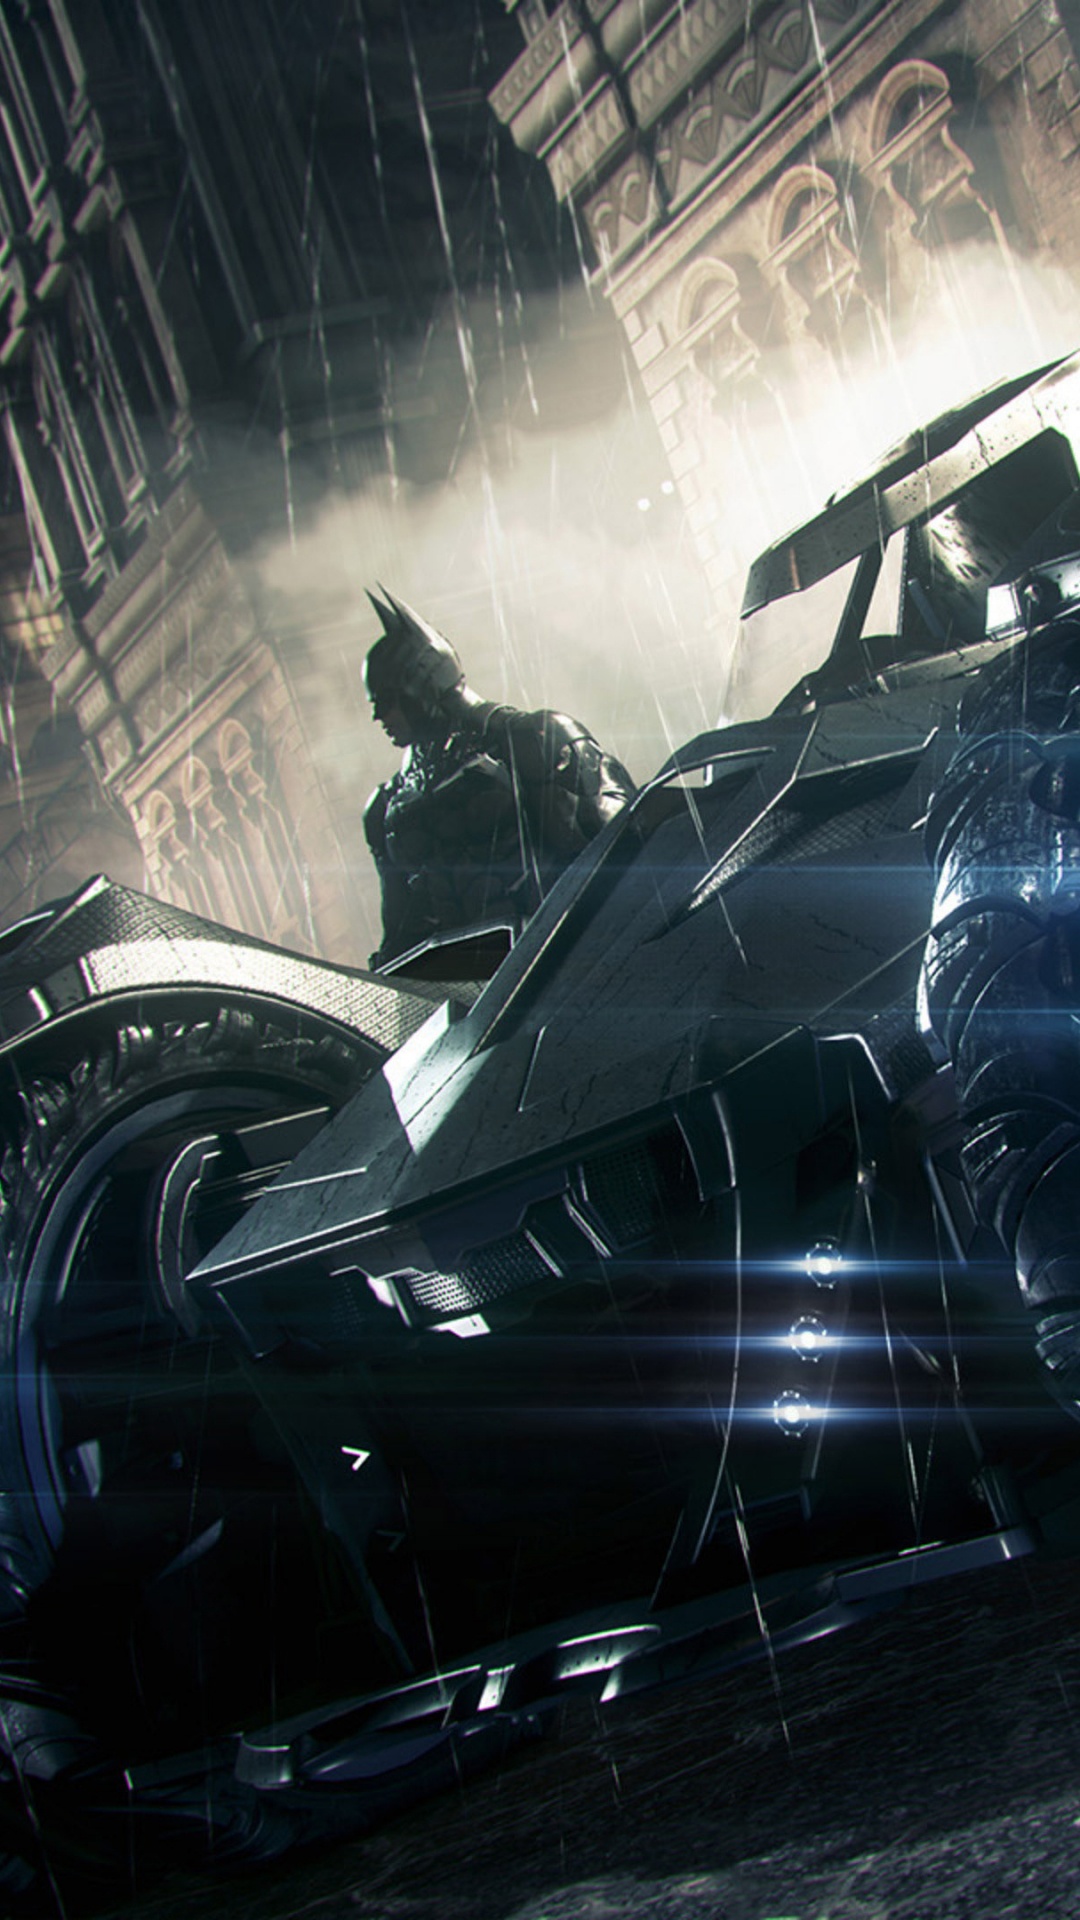 Обои Бэтмен рыцарь аркхема, Бэтмен, бэтмобиль, Бэтмен аркхем Сити, рокстеди студиос в разрешении 1080x1920